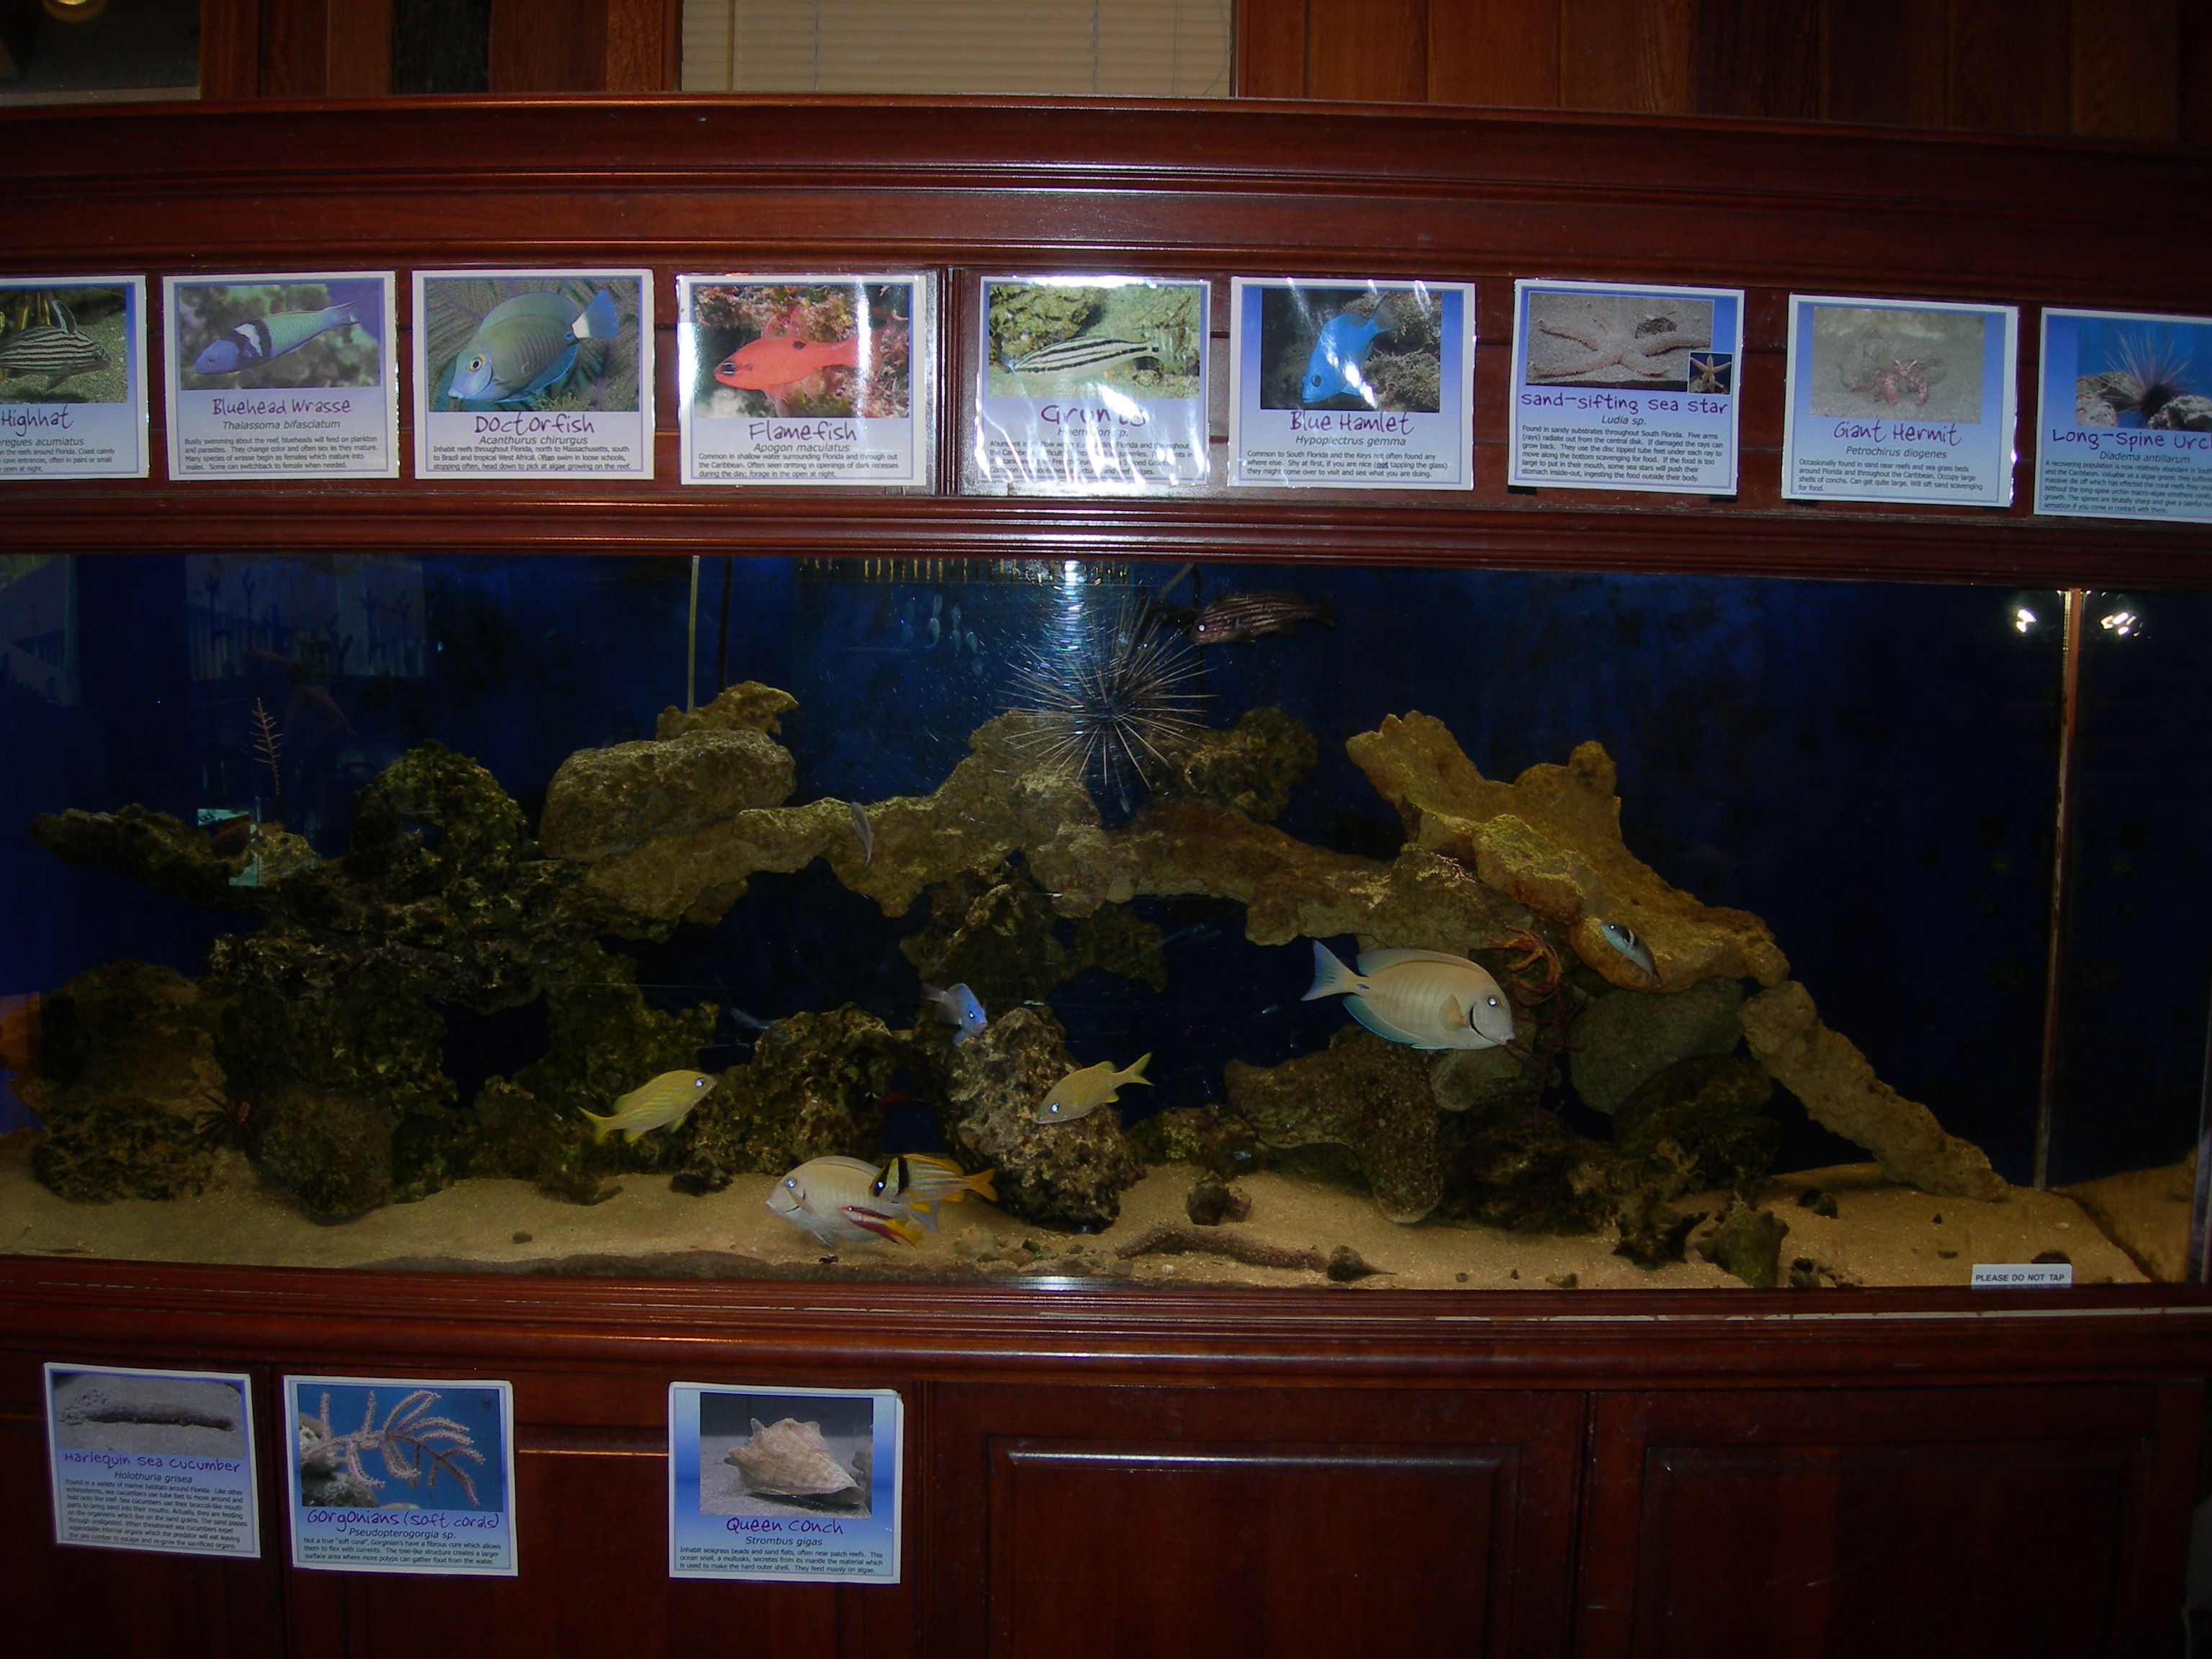 https://upload.wikimedia.org/wikipedia/commons/7/7e/Gumbo-limbo-fish-tank.jpg